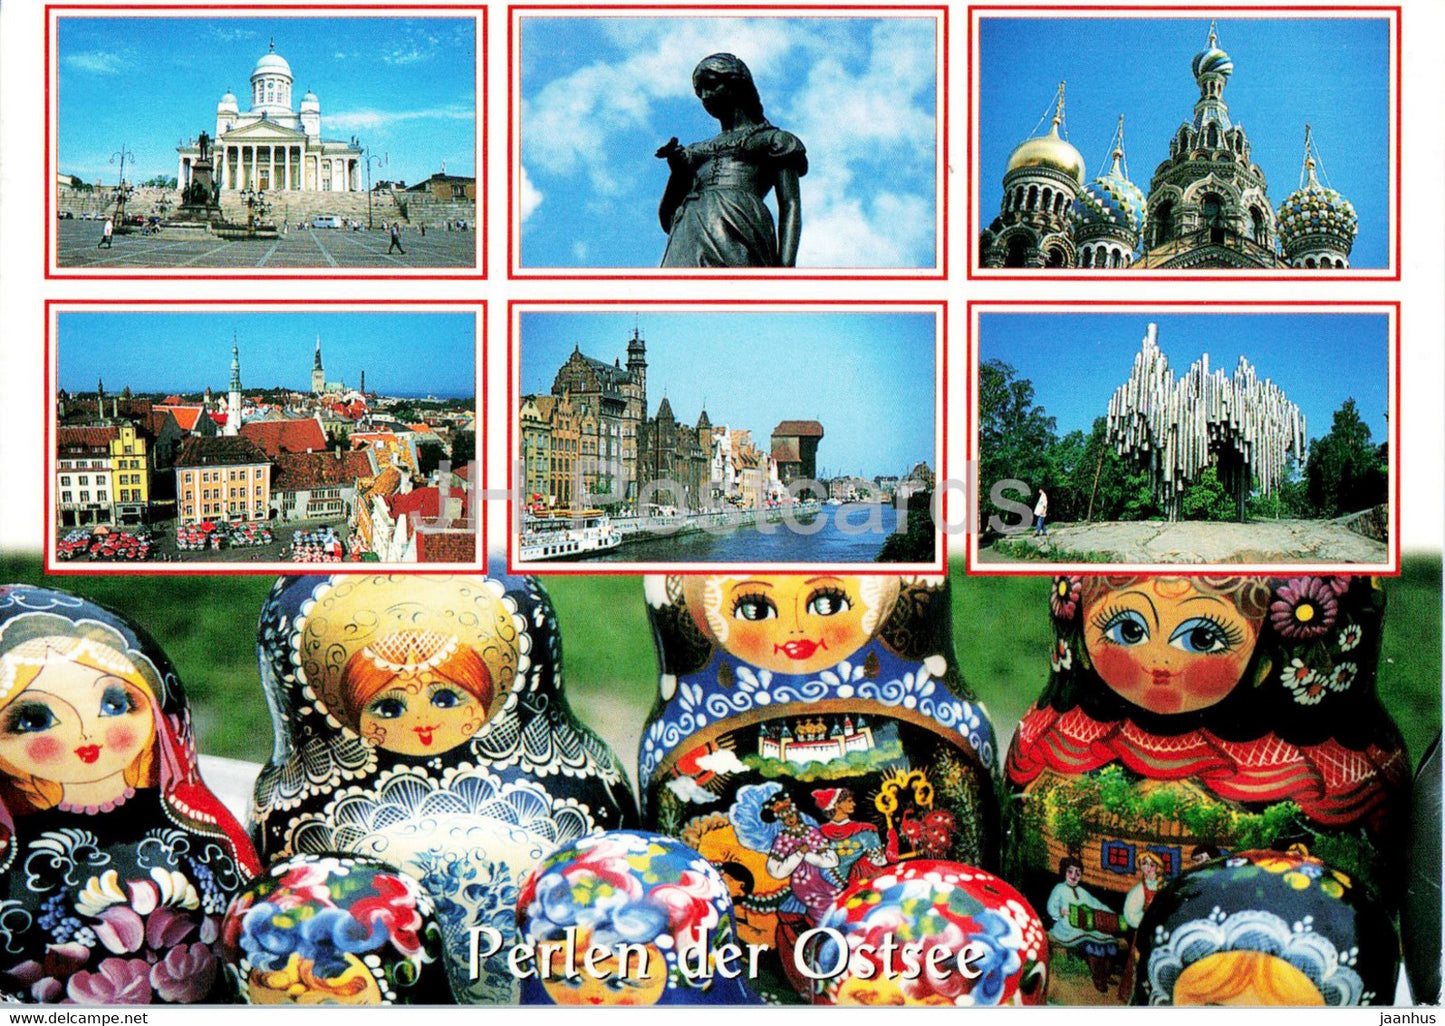 Perlen der Ostsee - Helsinki - Tallinn - Klaipeda - Danzig - Matryoshka  - Matruschkas - 2011 - Germany - unused - JH Postcards